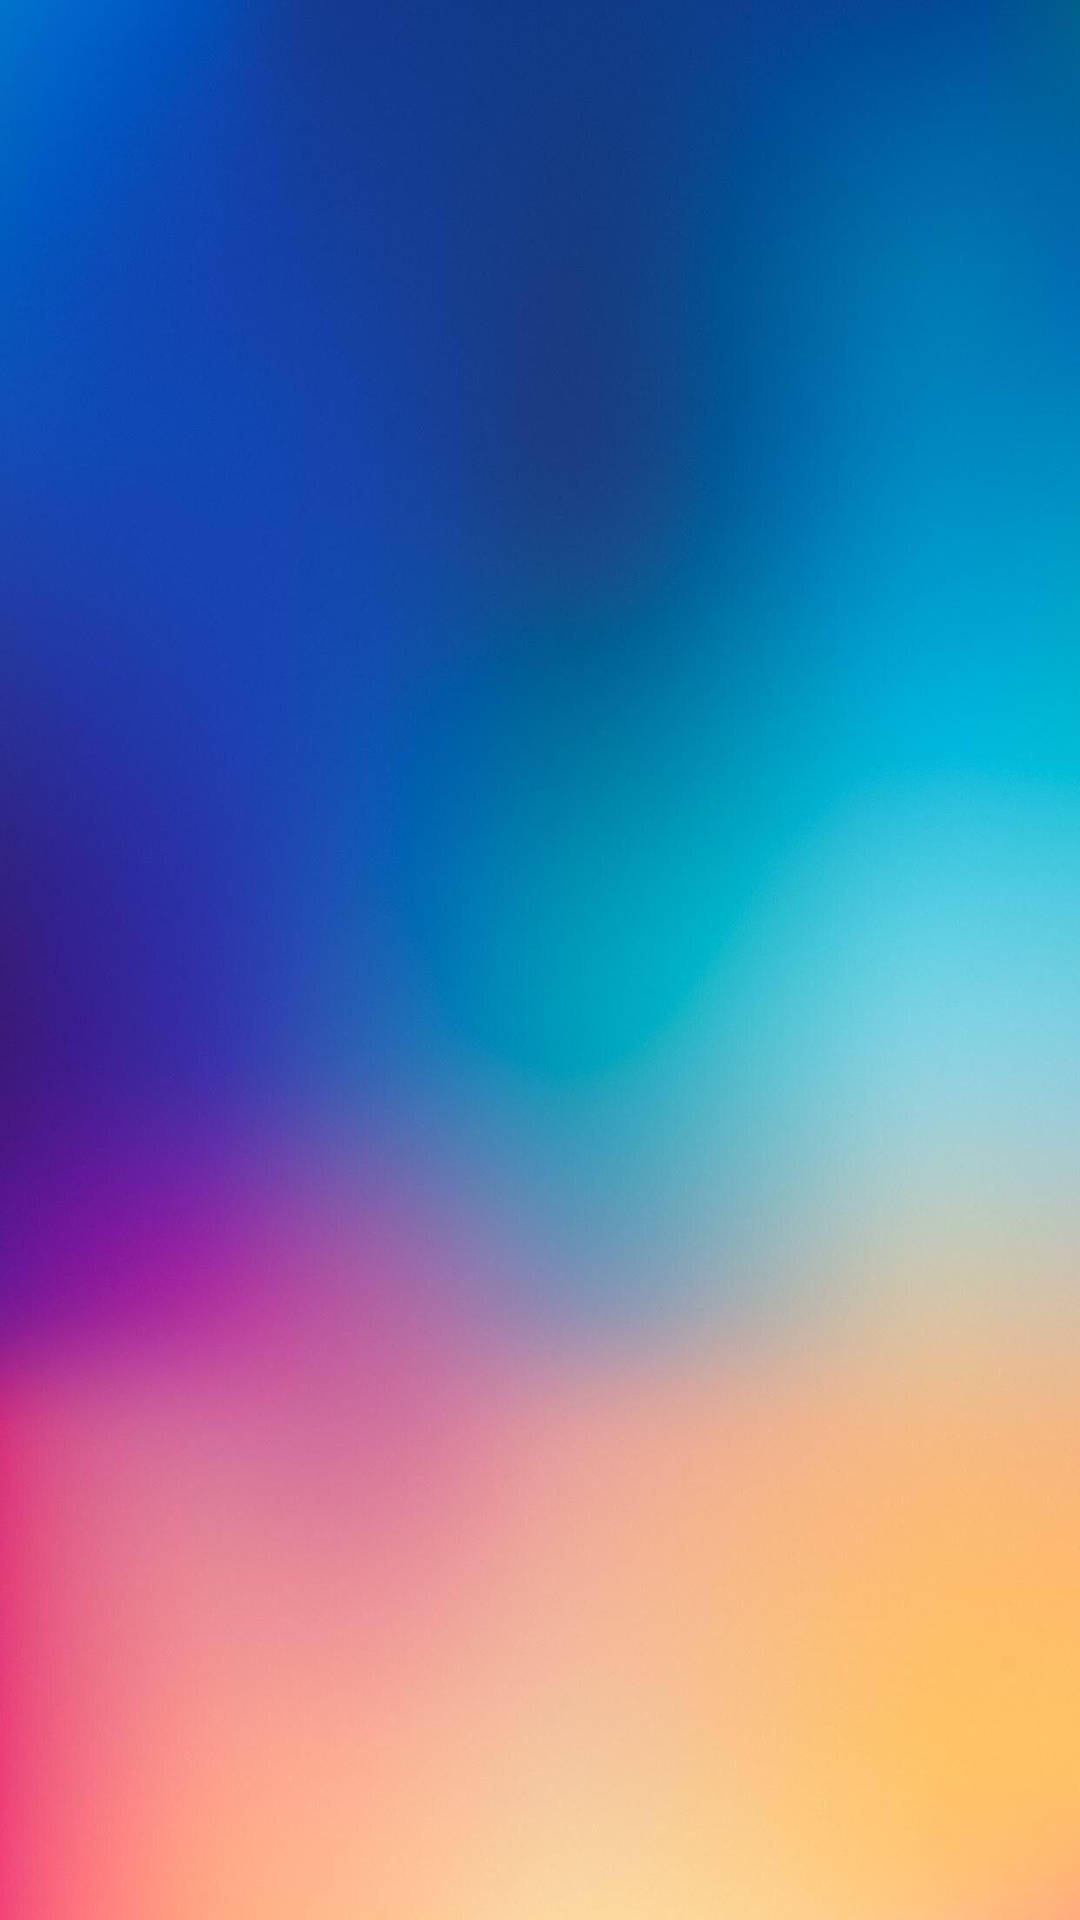 Plain Blue Orange Blur Gradient Iphone Picture